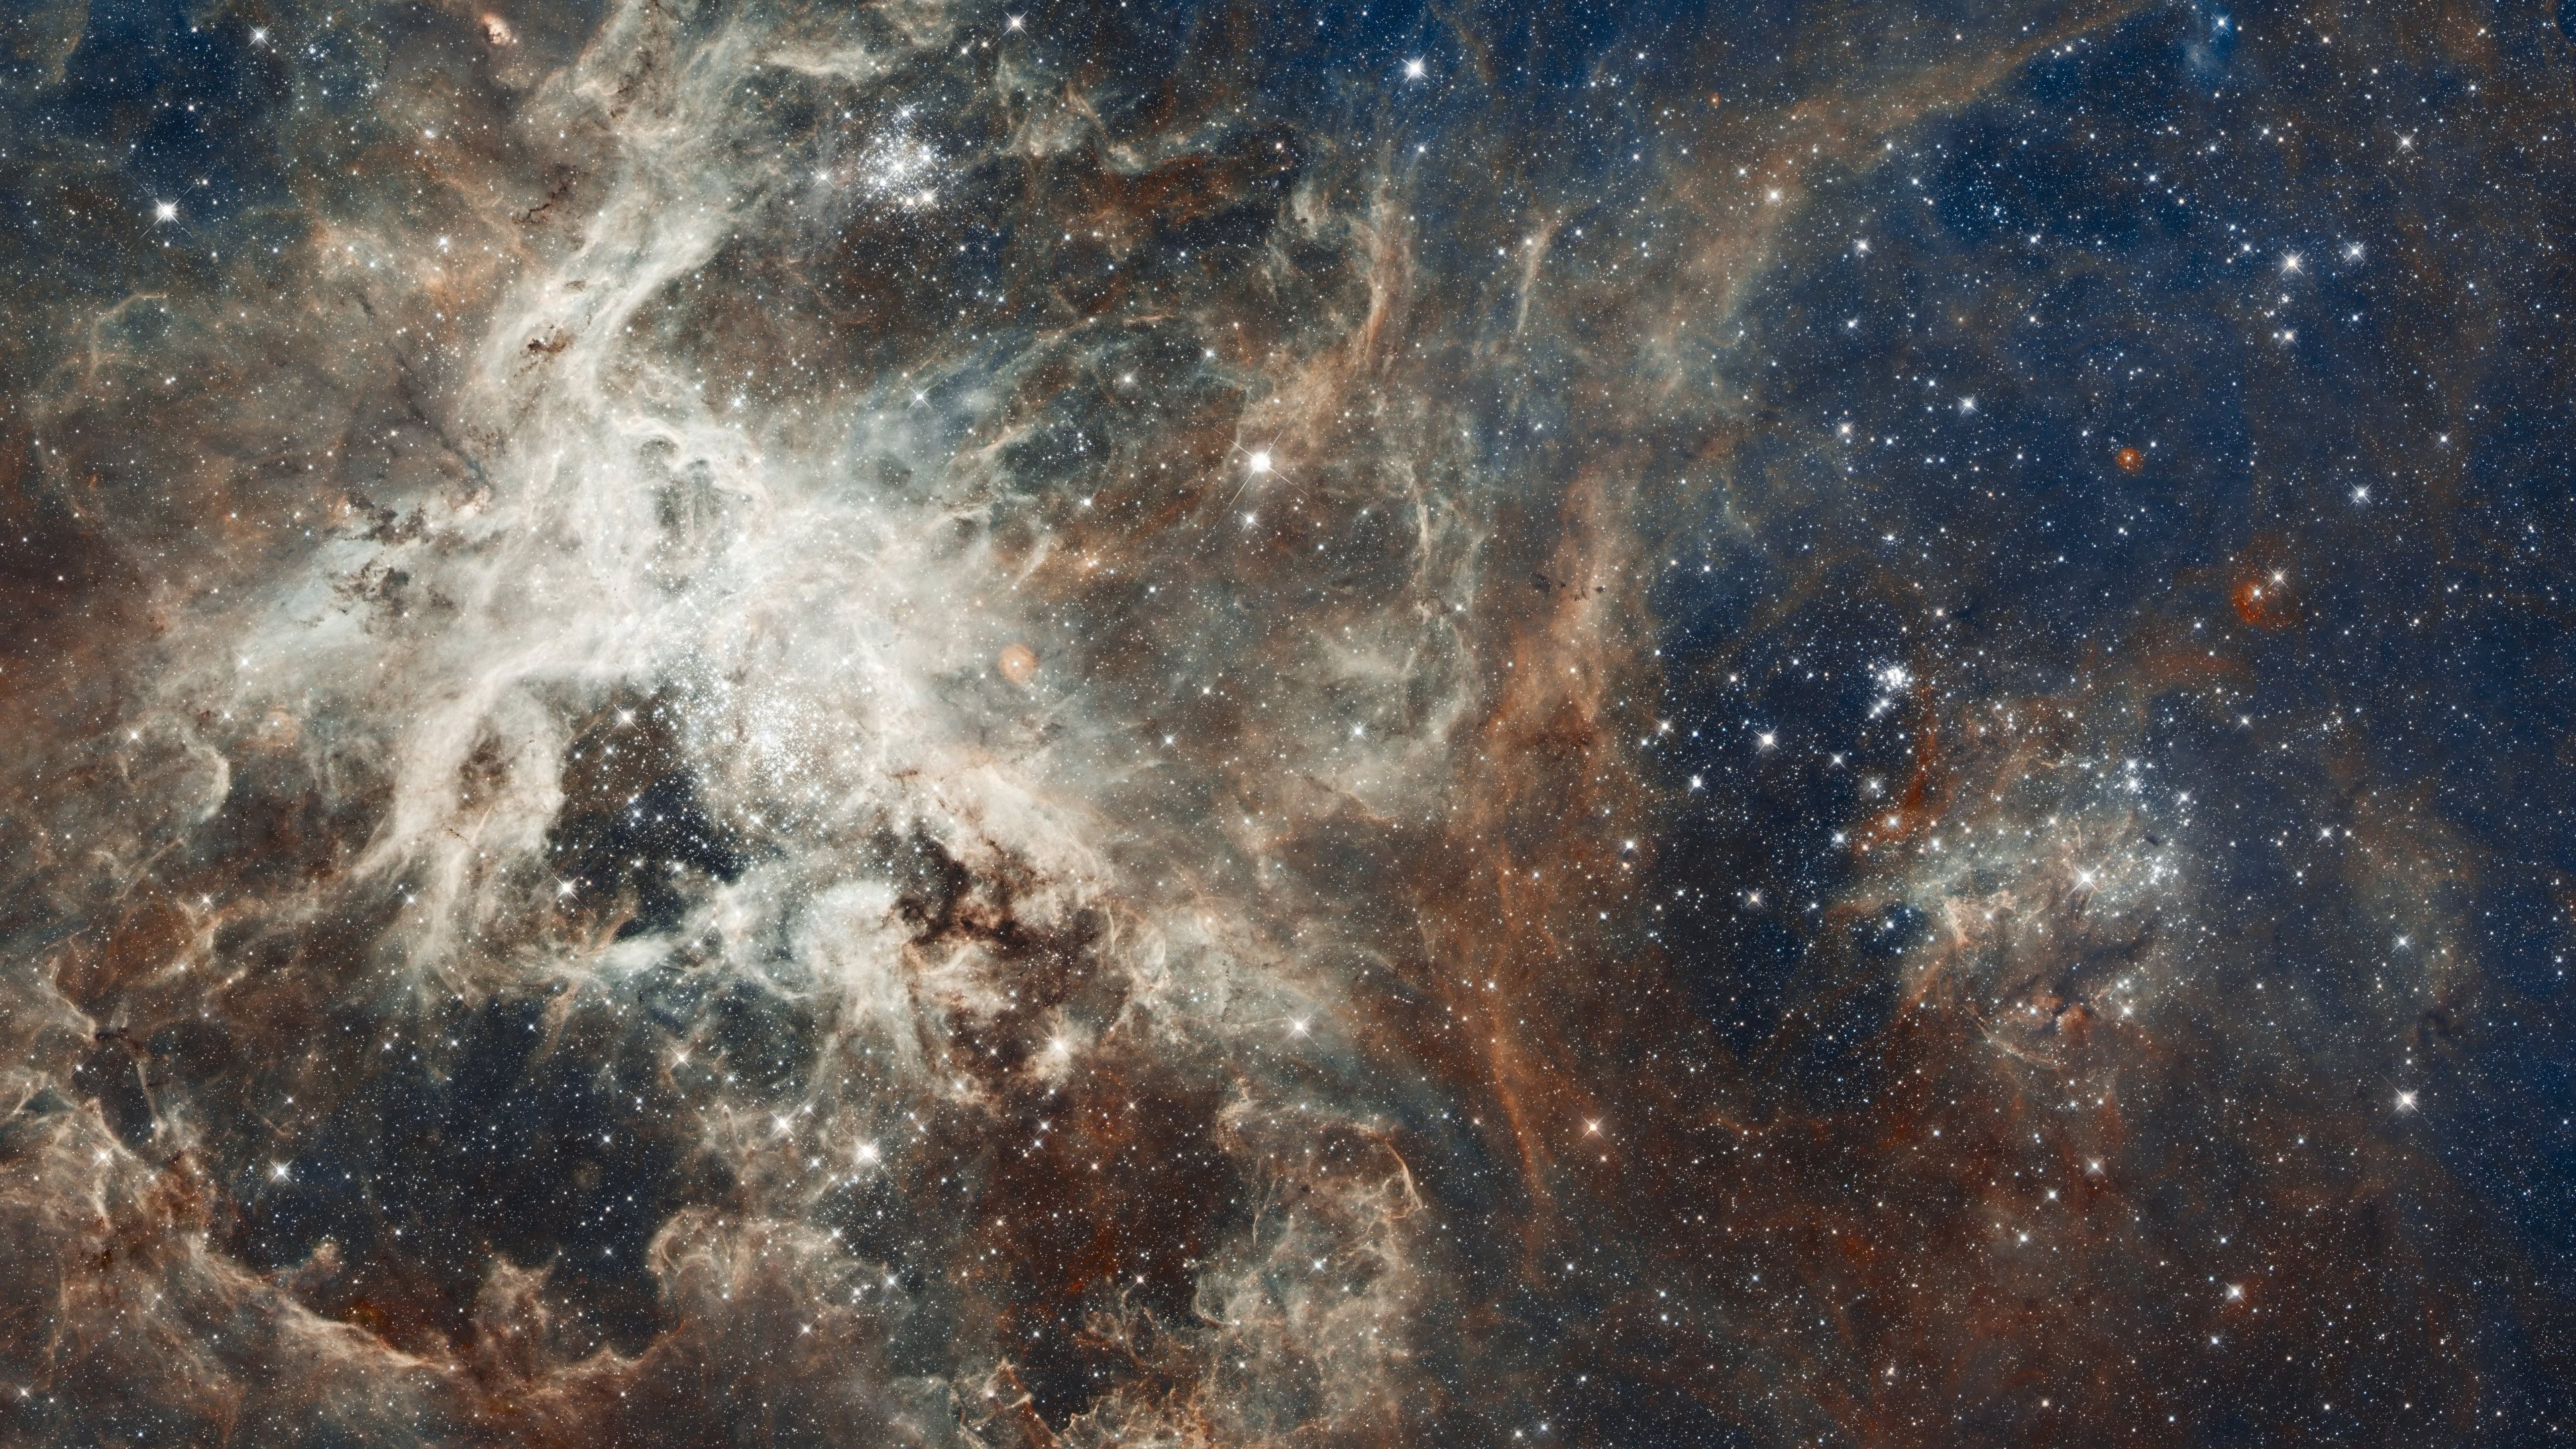  ground in 30 Doradus located in the heart of the Tarantula Nebula